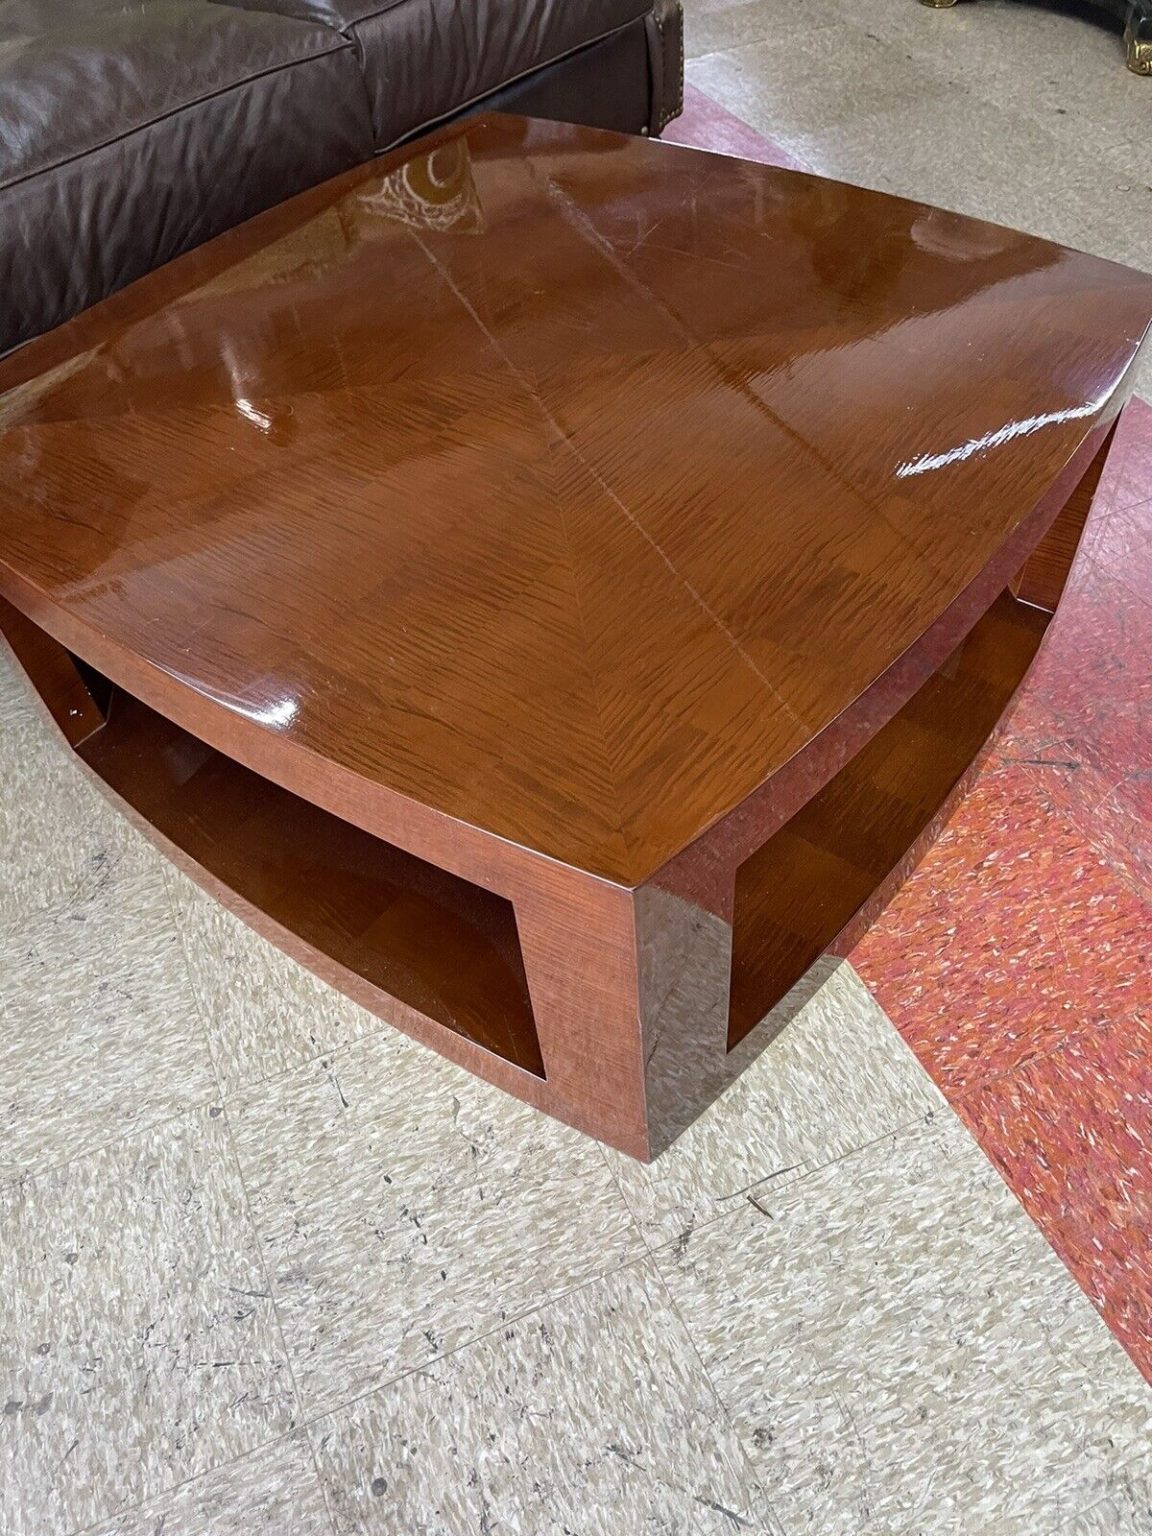 Two-Tier Coffee Table angle